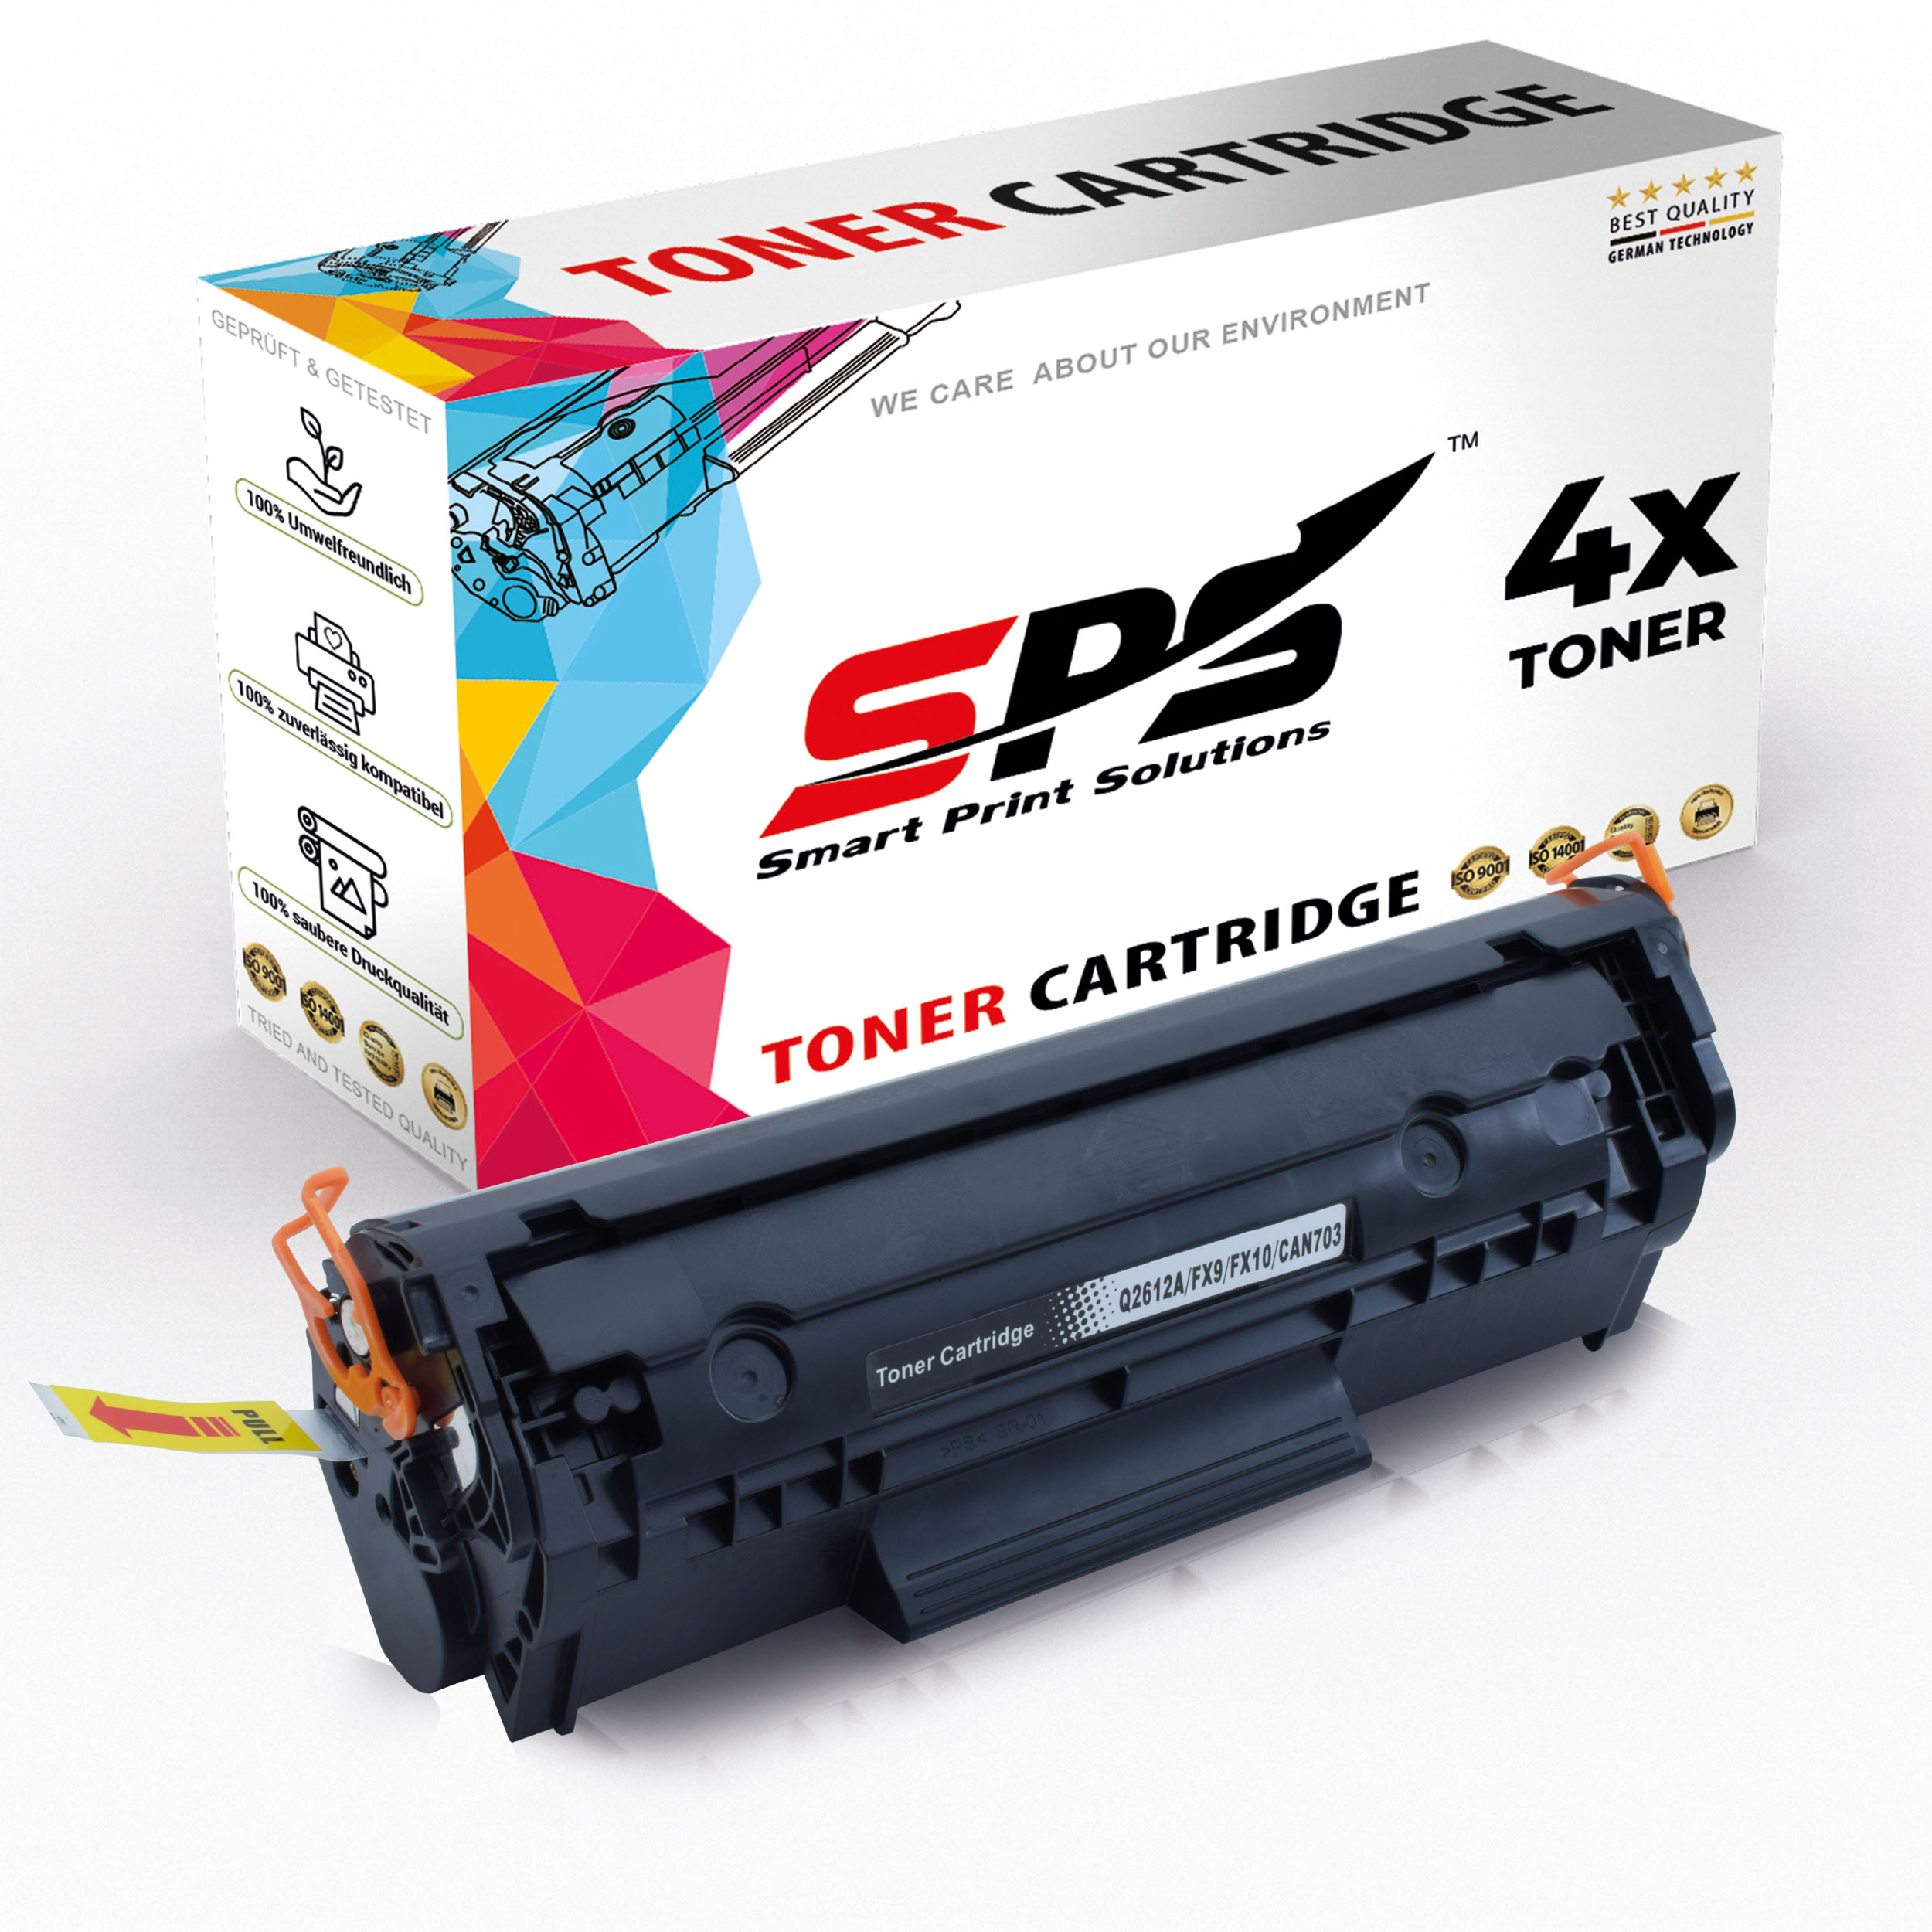 SPS S-12115 Toner / Laserjet Q2612A Schwarz (12A 3036)